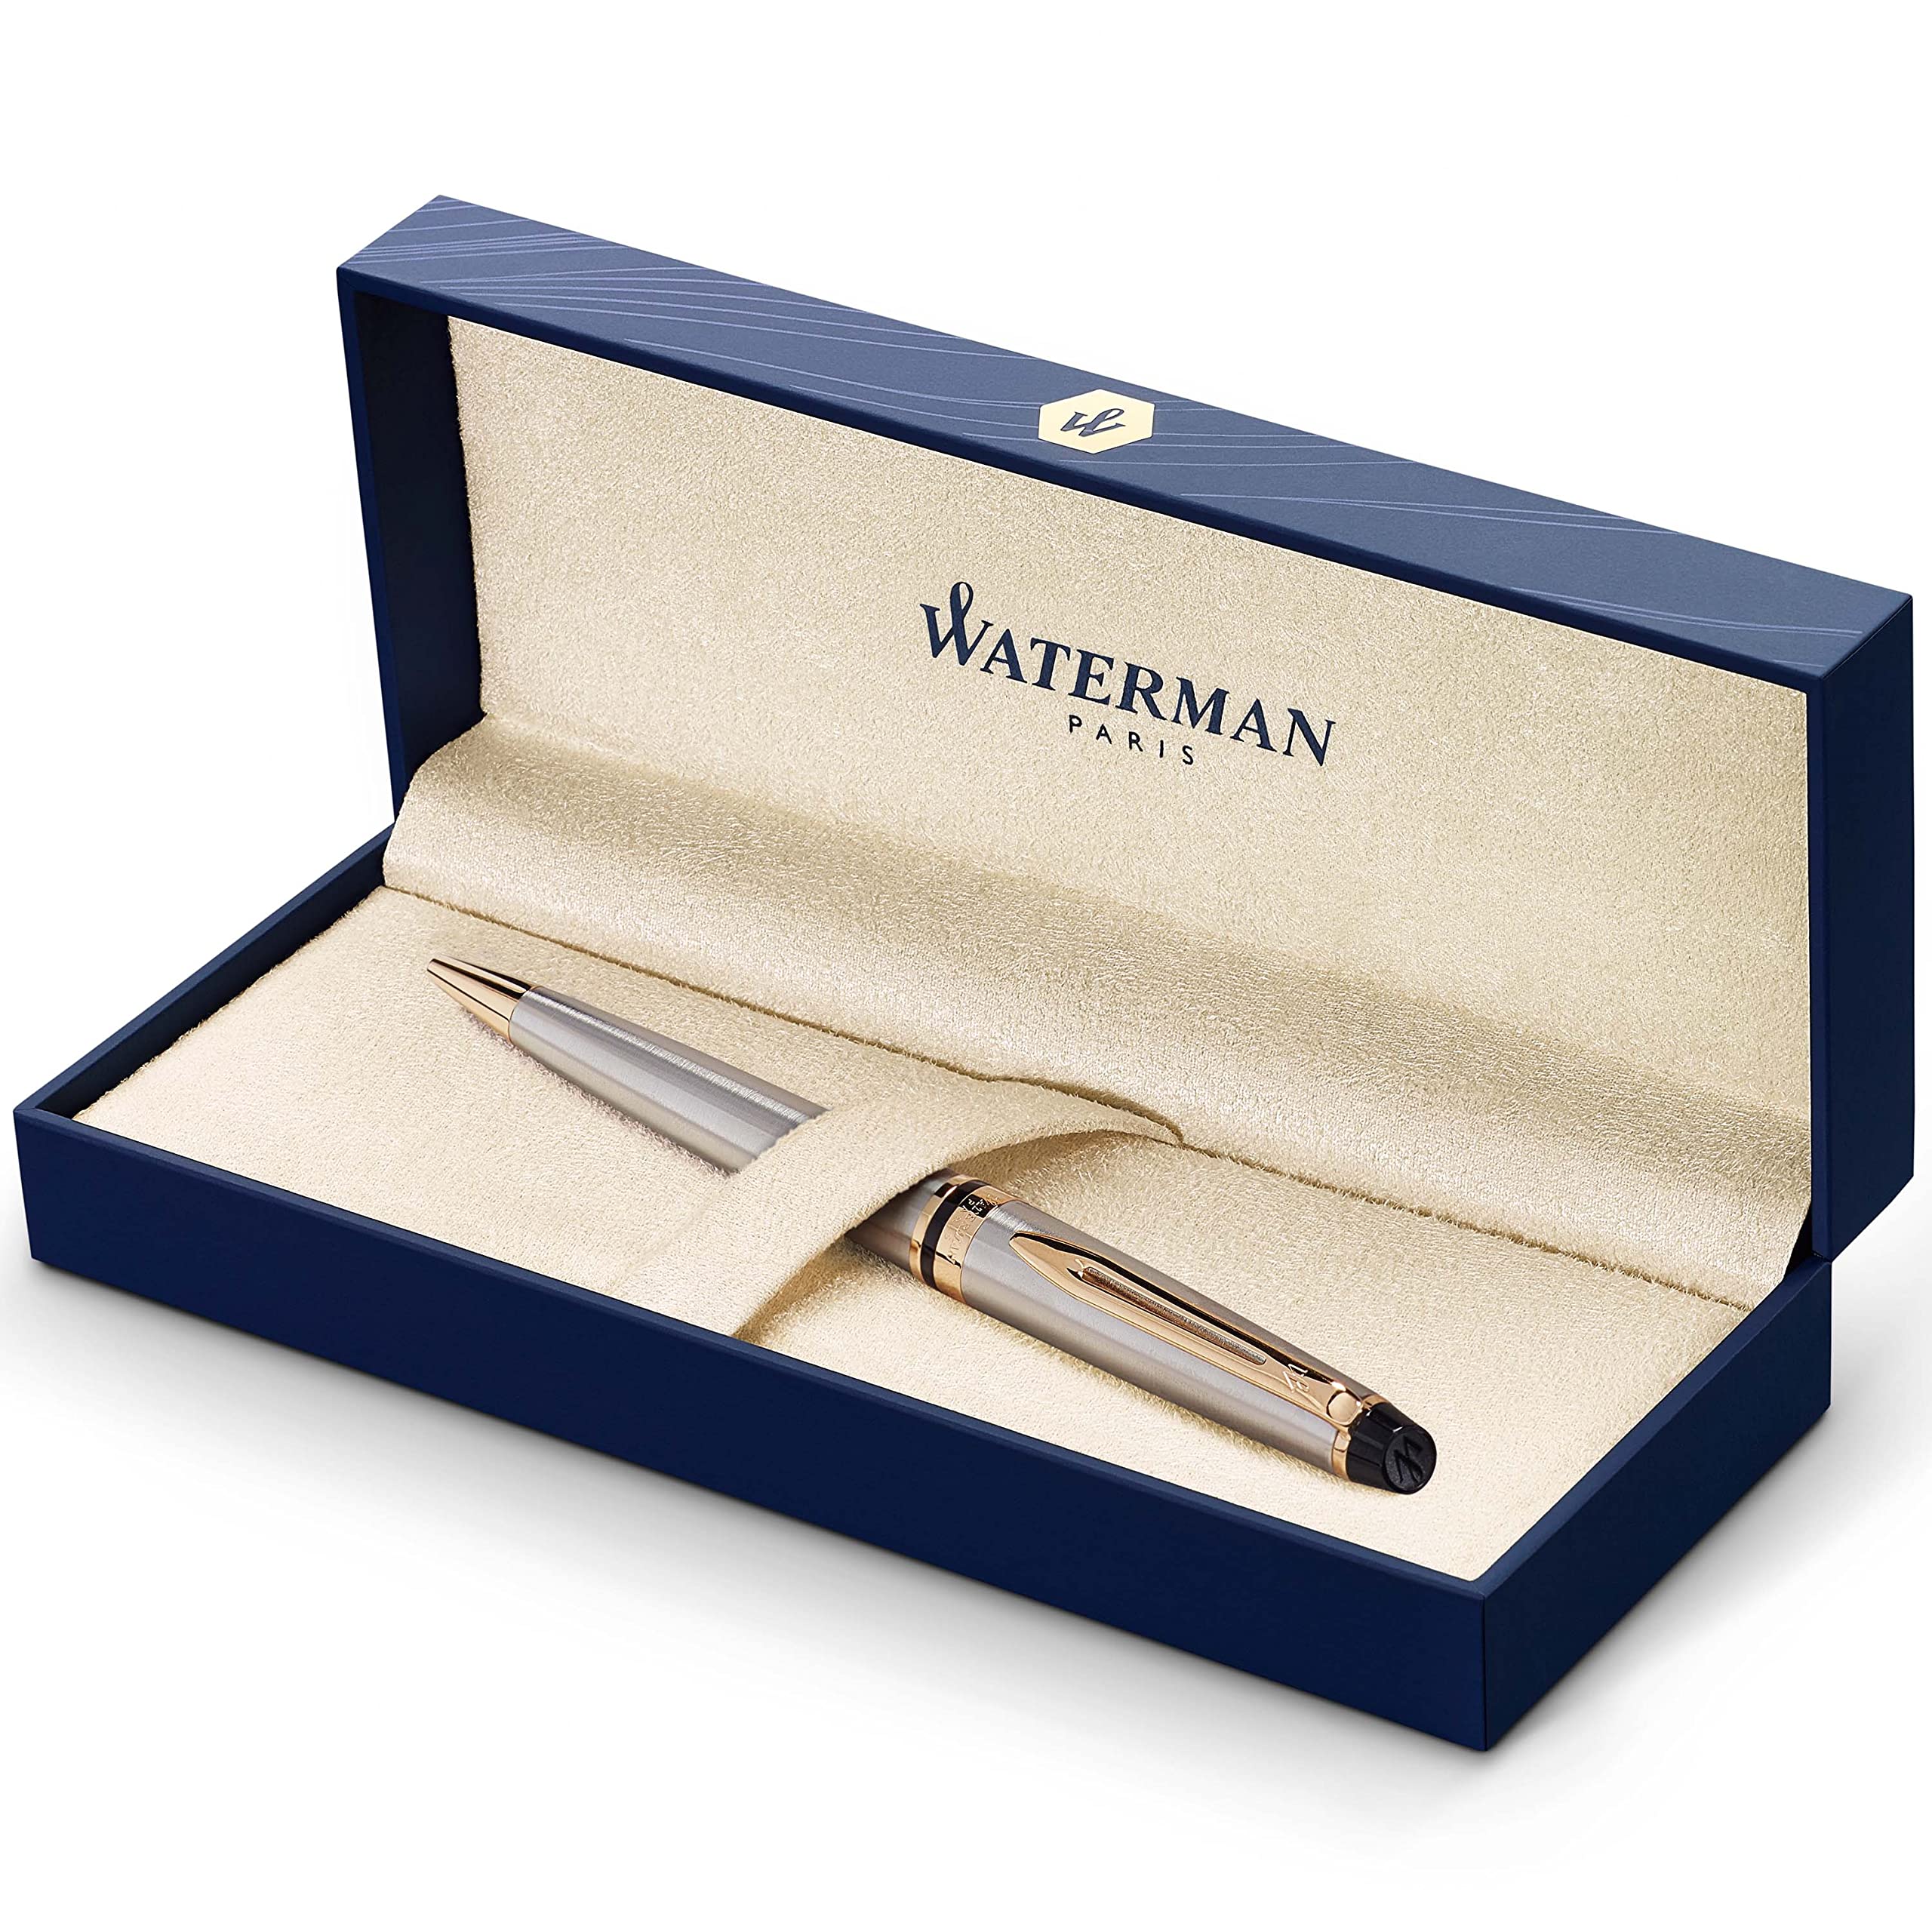 Waterman Expert Ballpoint Pen - 23k Gold Trim - Medium Point with Blue Ink